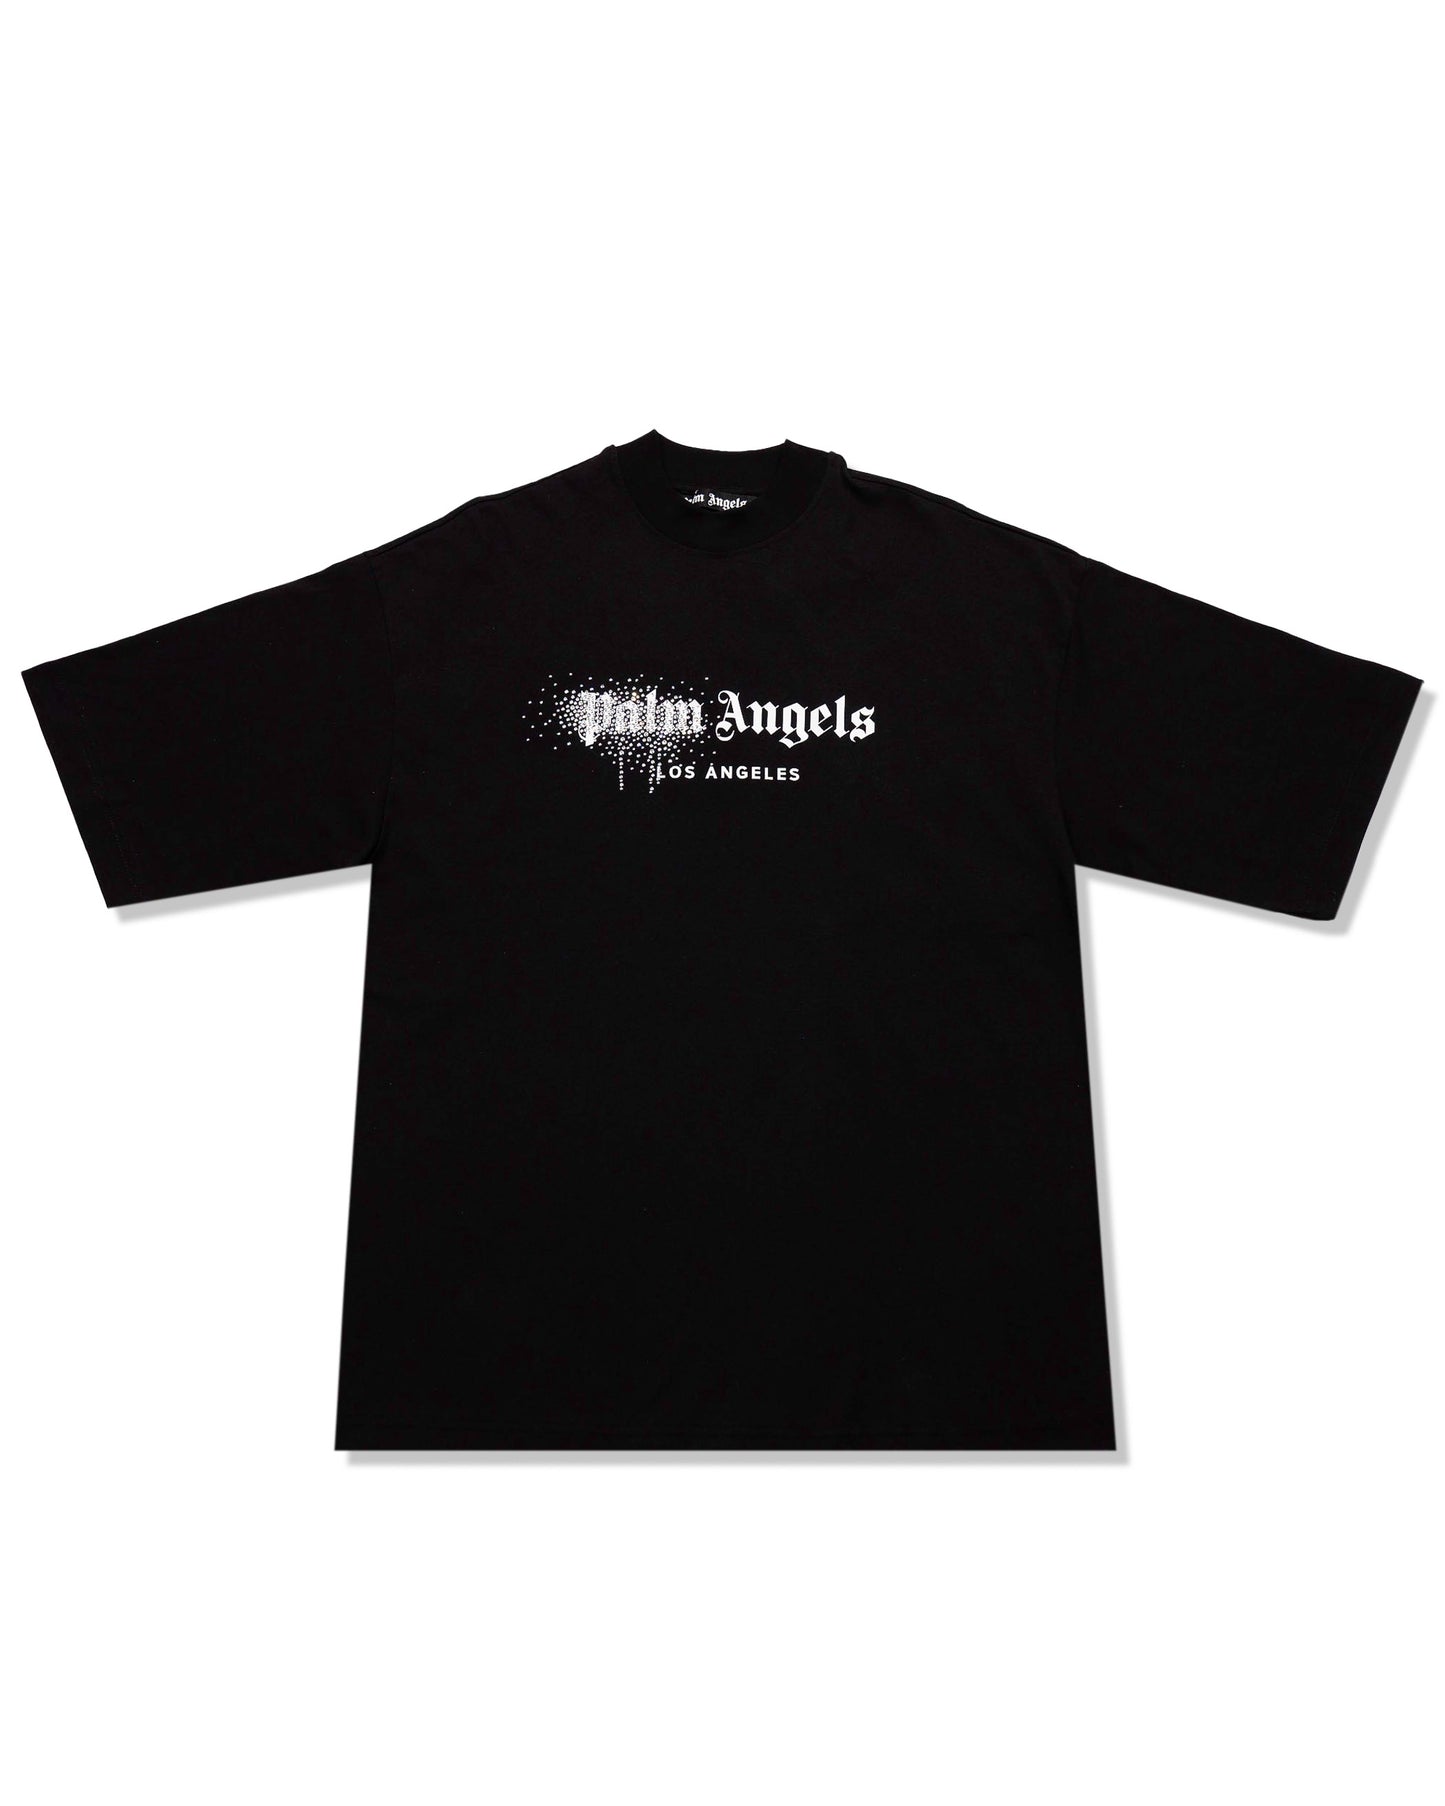 Palm Angels Los Angeles T-Shirt Black Diamonds